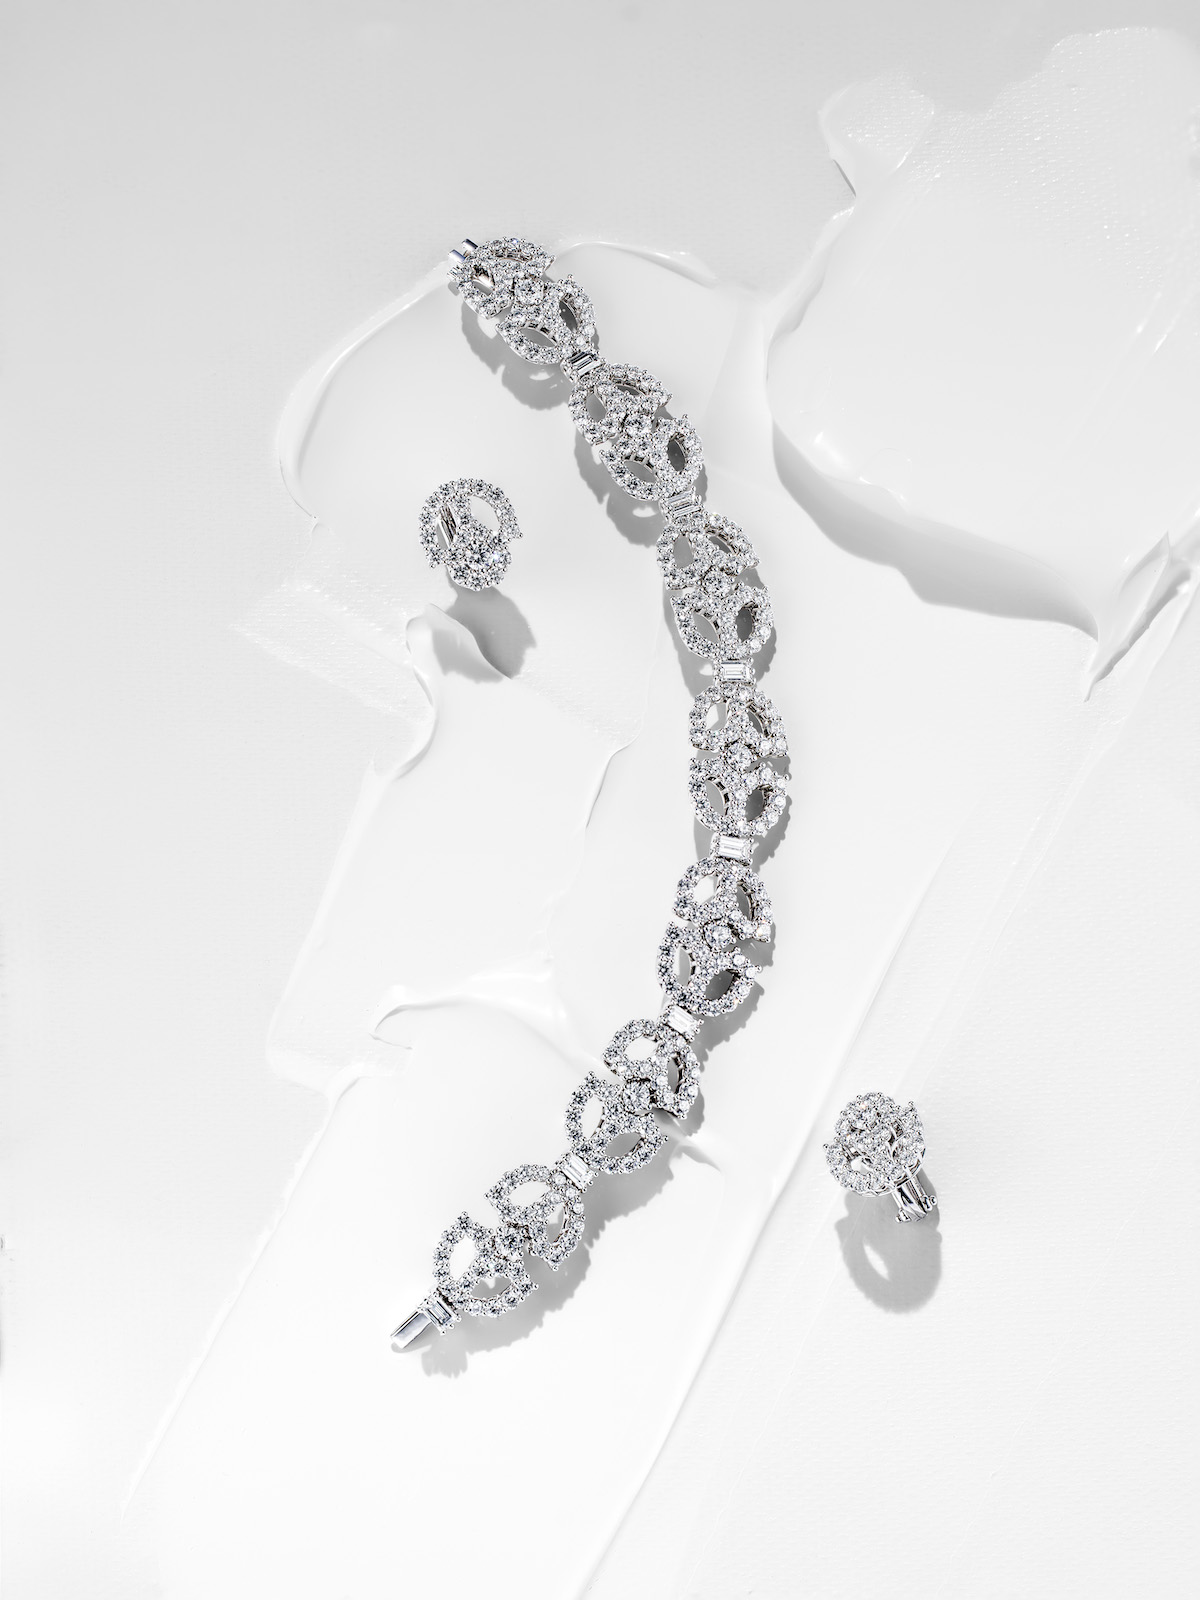 Harry Winston, Art Deco Diamond Bracelet, Diamond Earrings